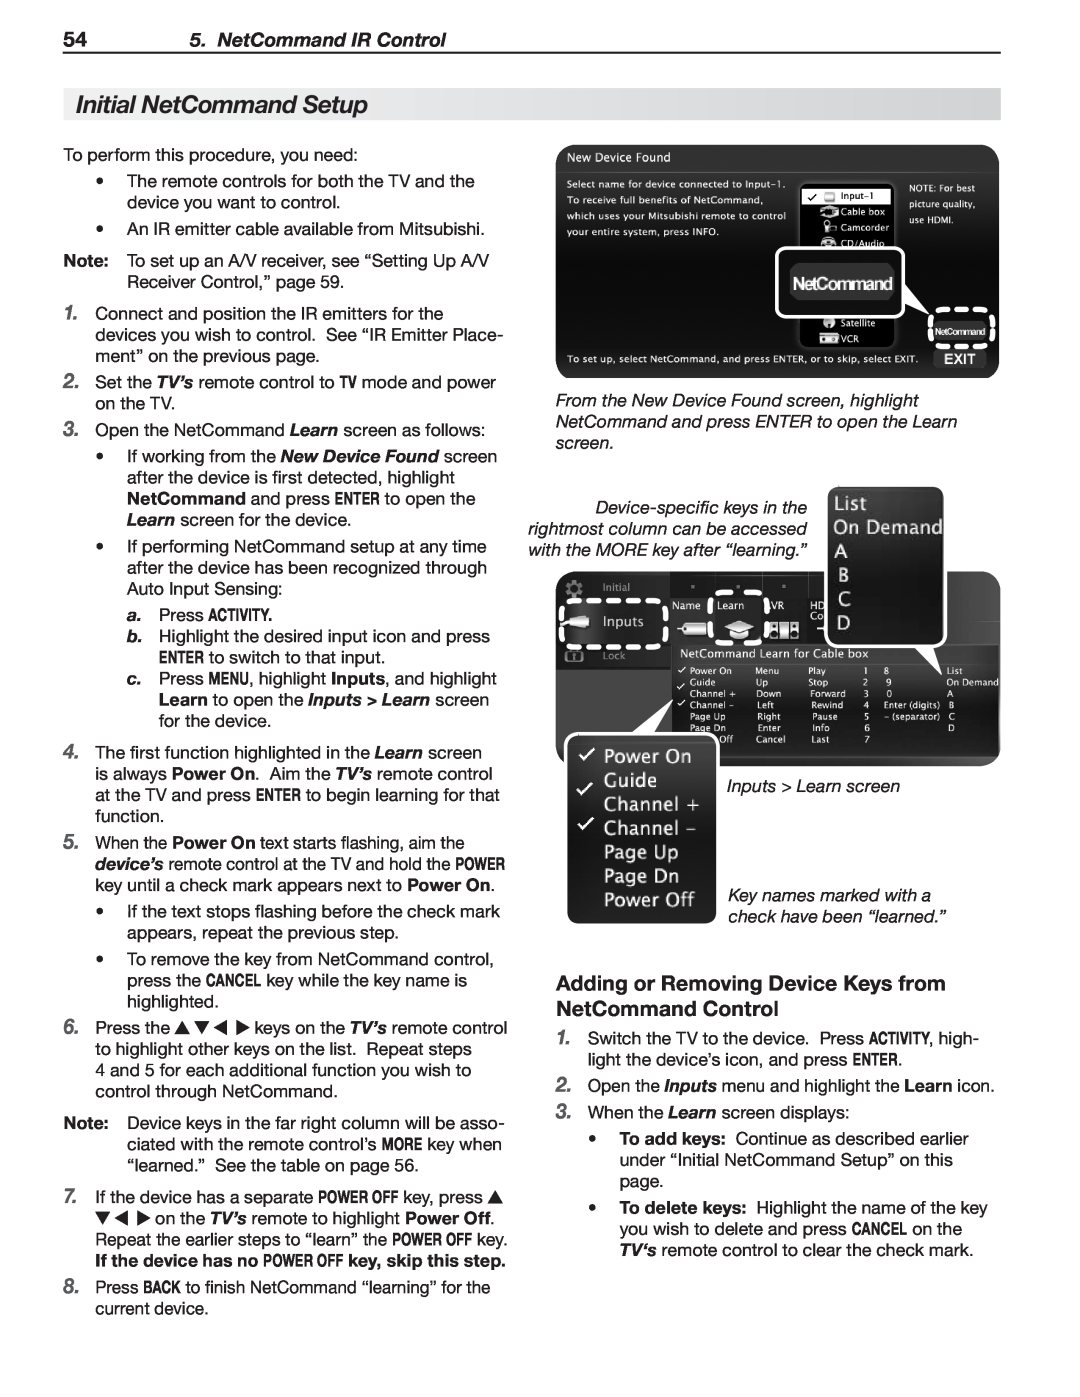 Mitsubishi Electronics LT-40153, LT-46151 Initial NetCommand Setup, Adding or Removing Device Keys from NetCommand Control 